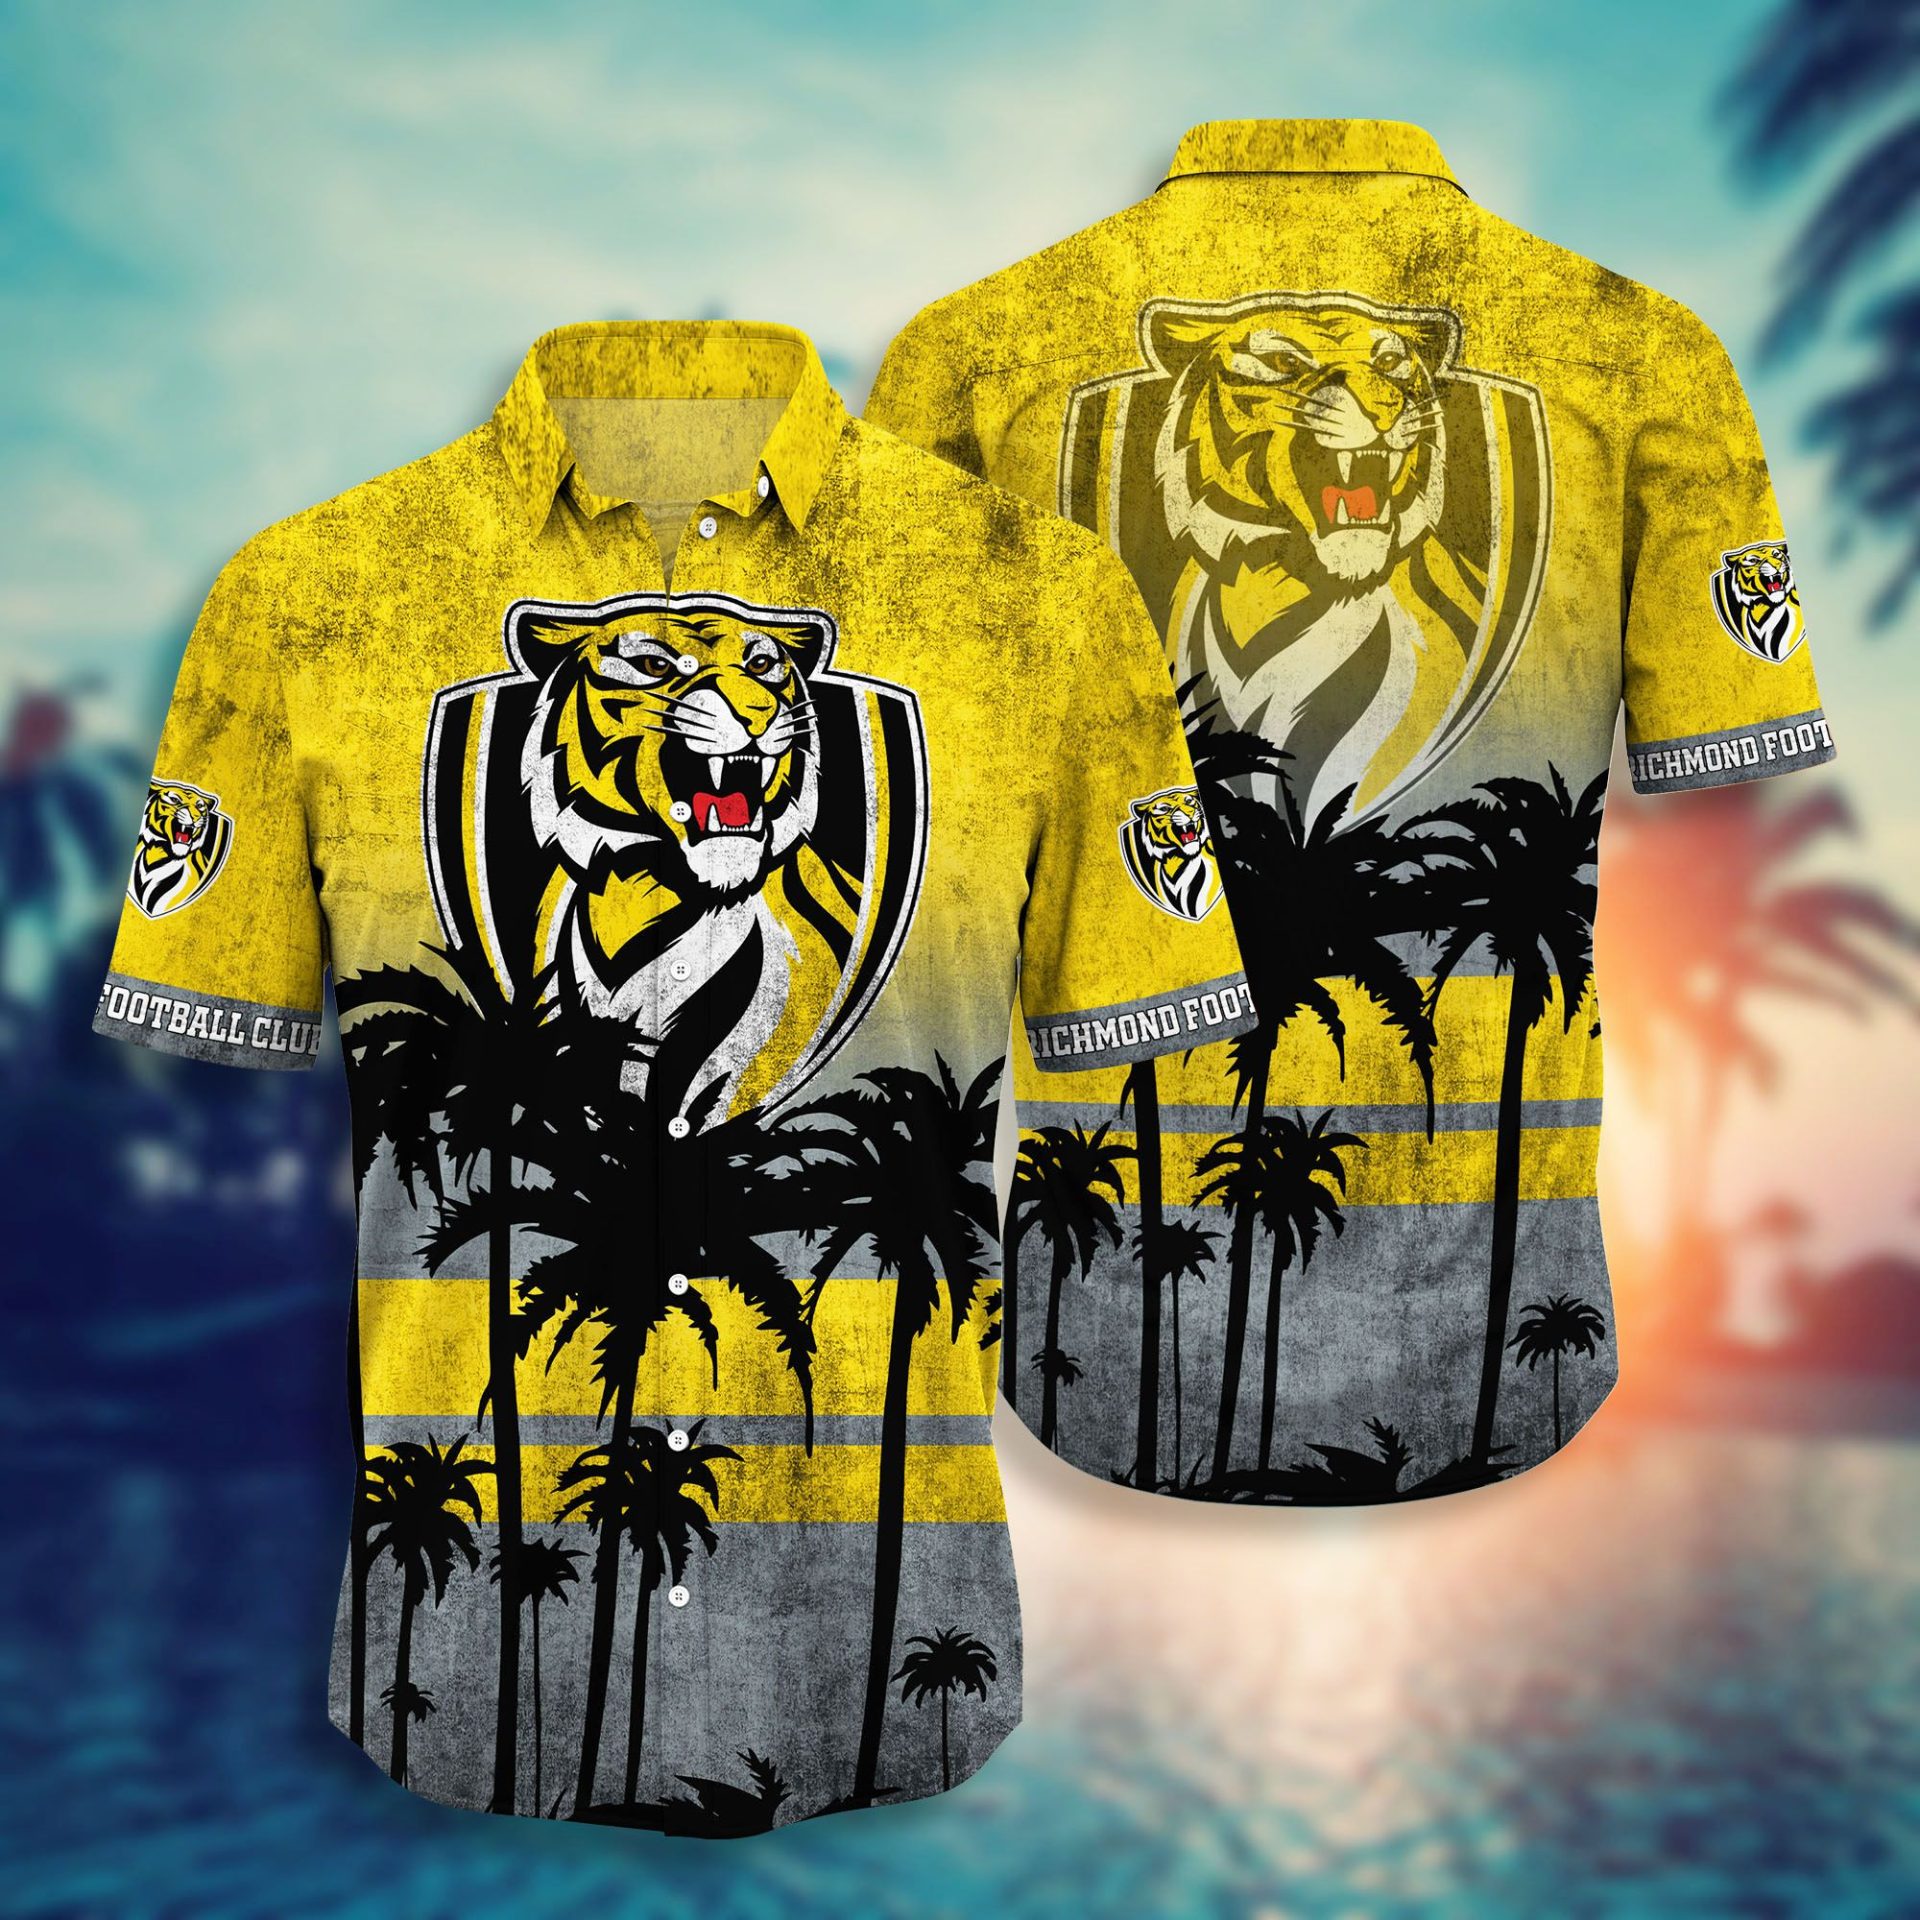 Afl Richmond Tigers Palm Tree Patterns Tropical Hawaiian Shirt For Men Women Fans